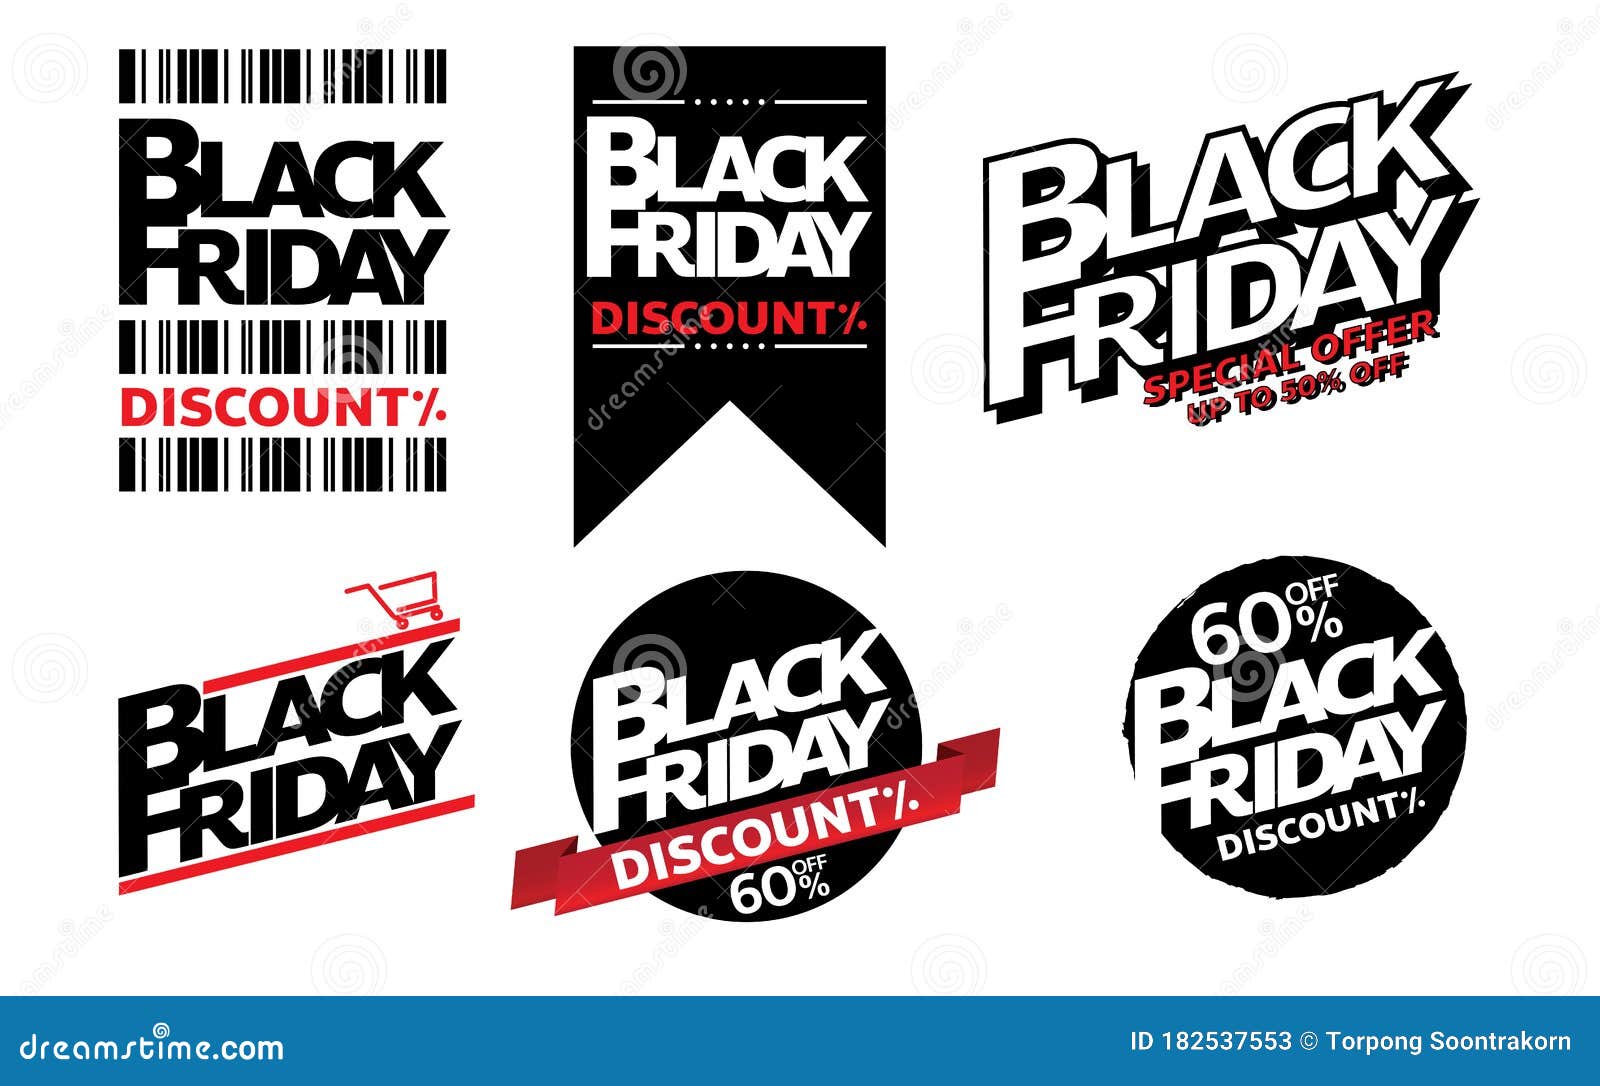 blackfriday sale shop promotion tag  for marketing